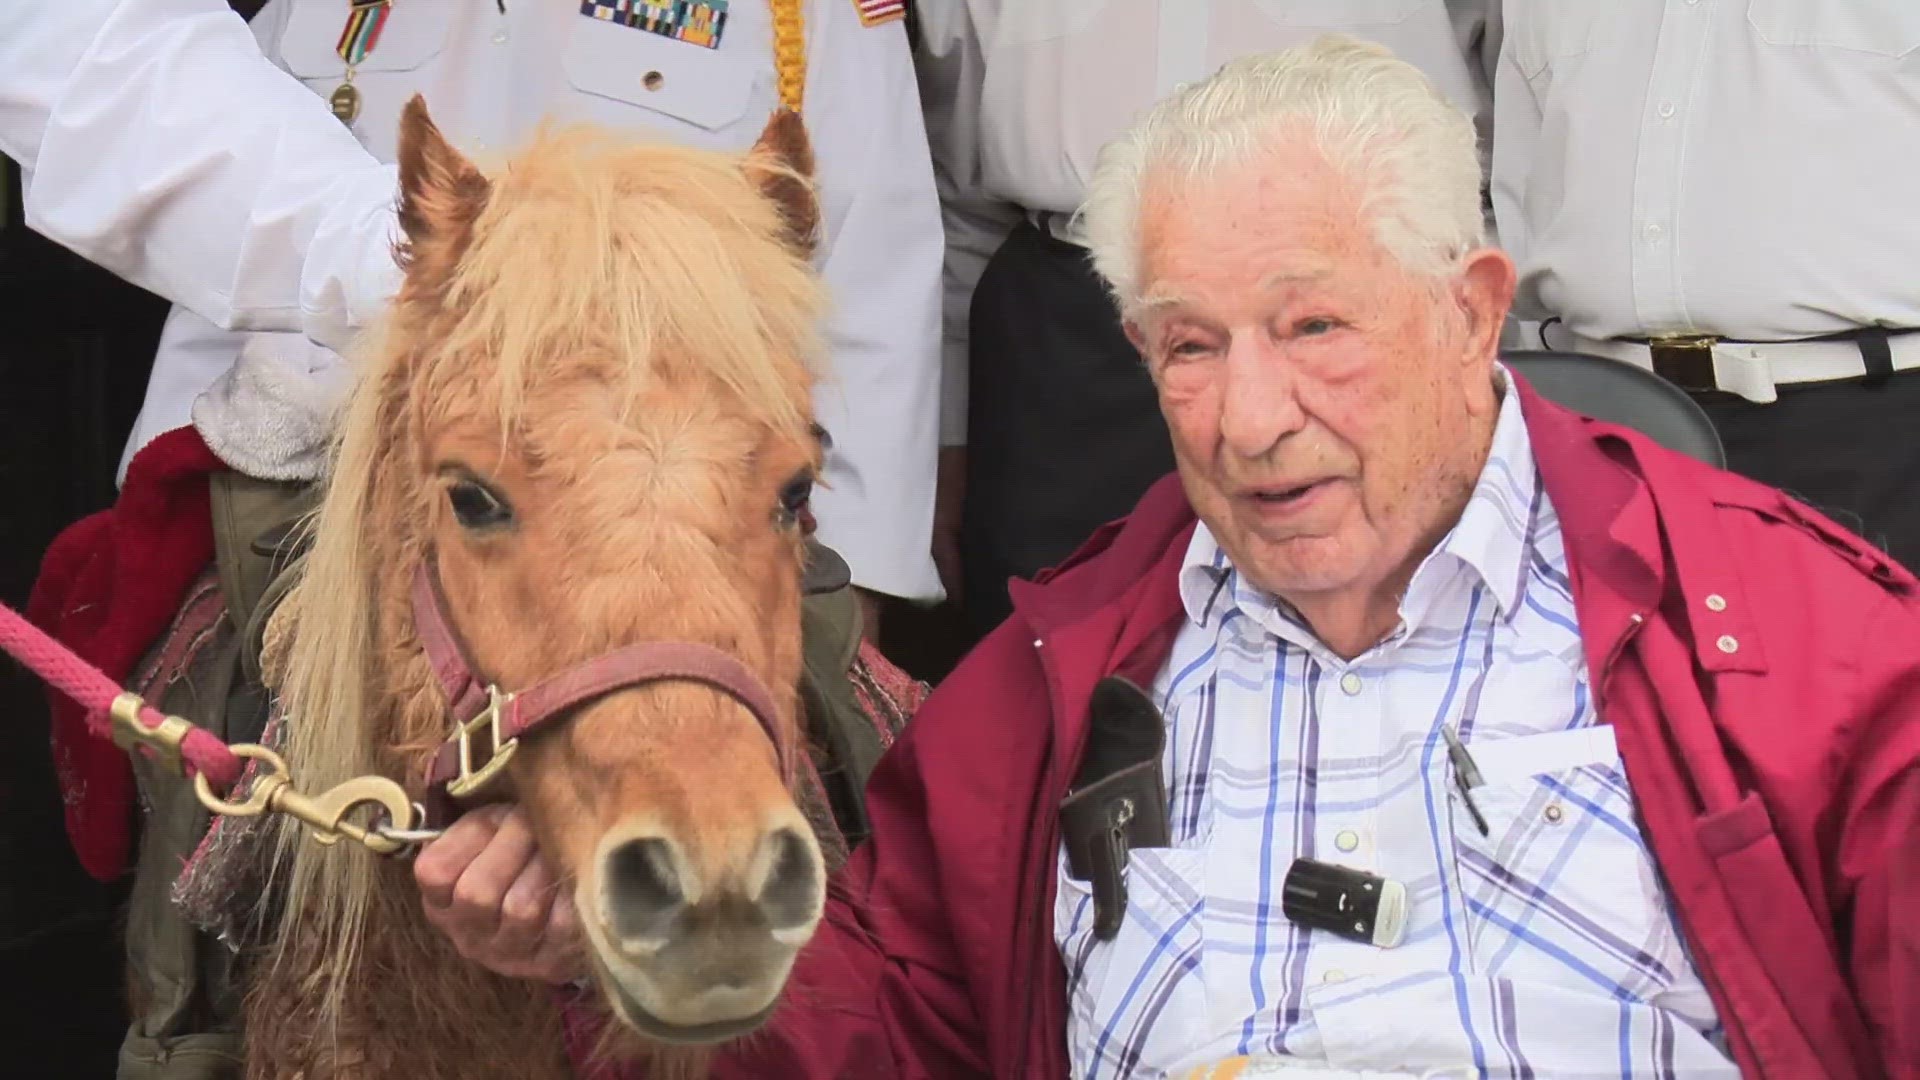 100-year-old Yuba City man meets pony, fulfills lifelong Christmas wish